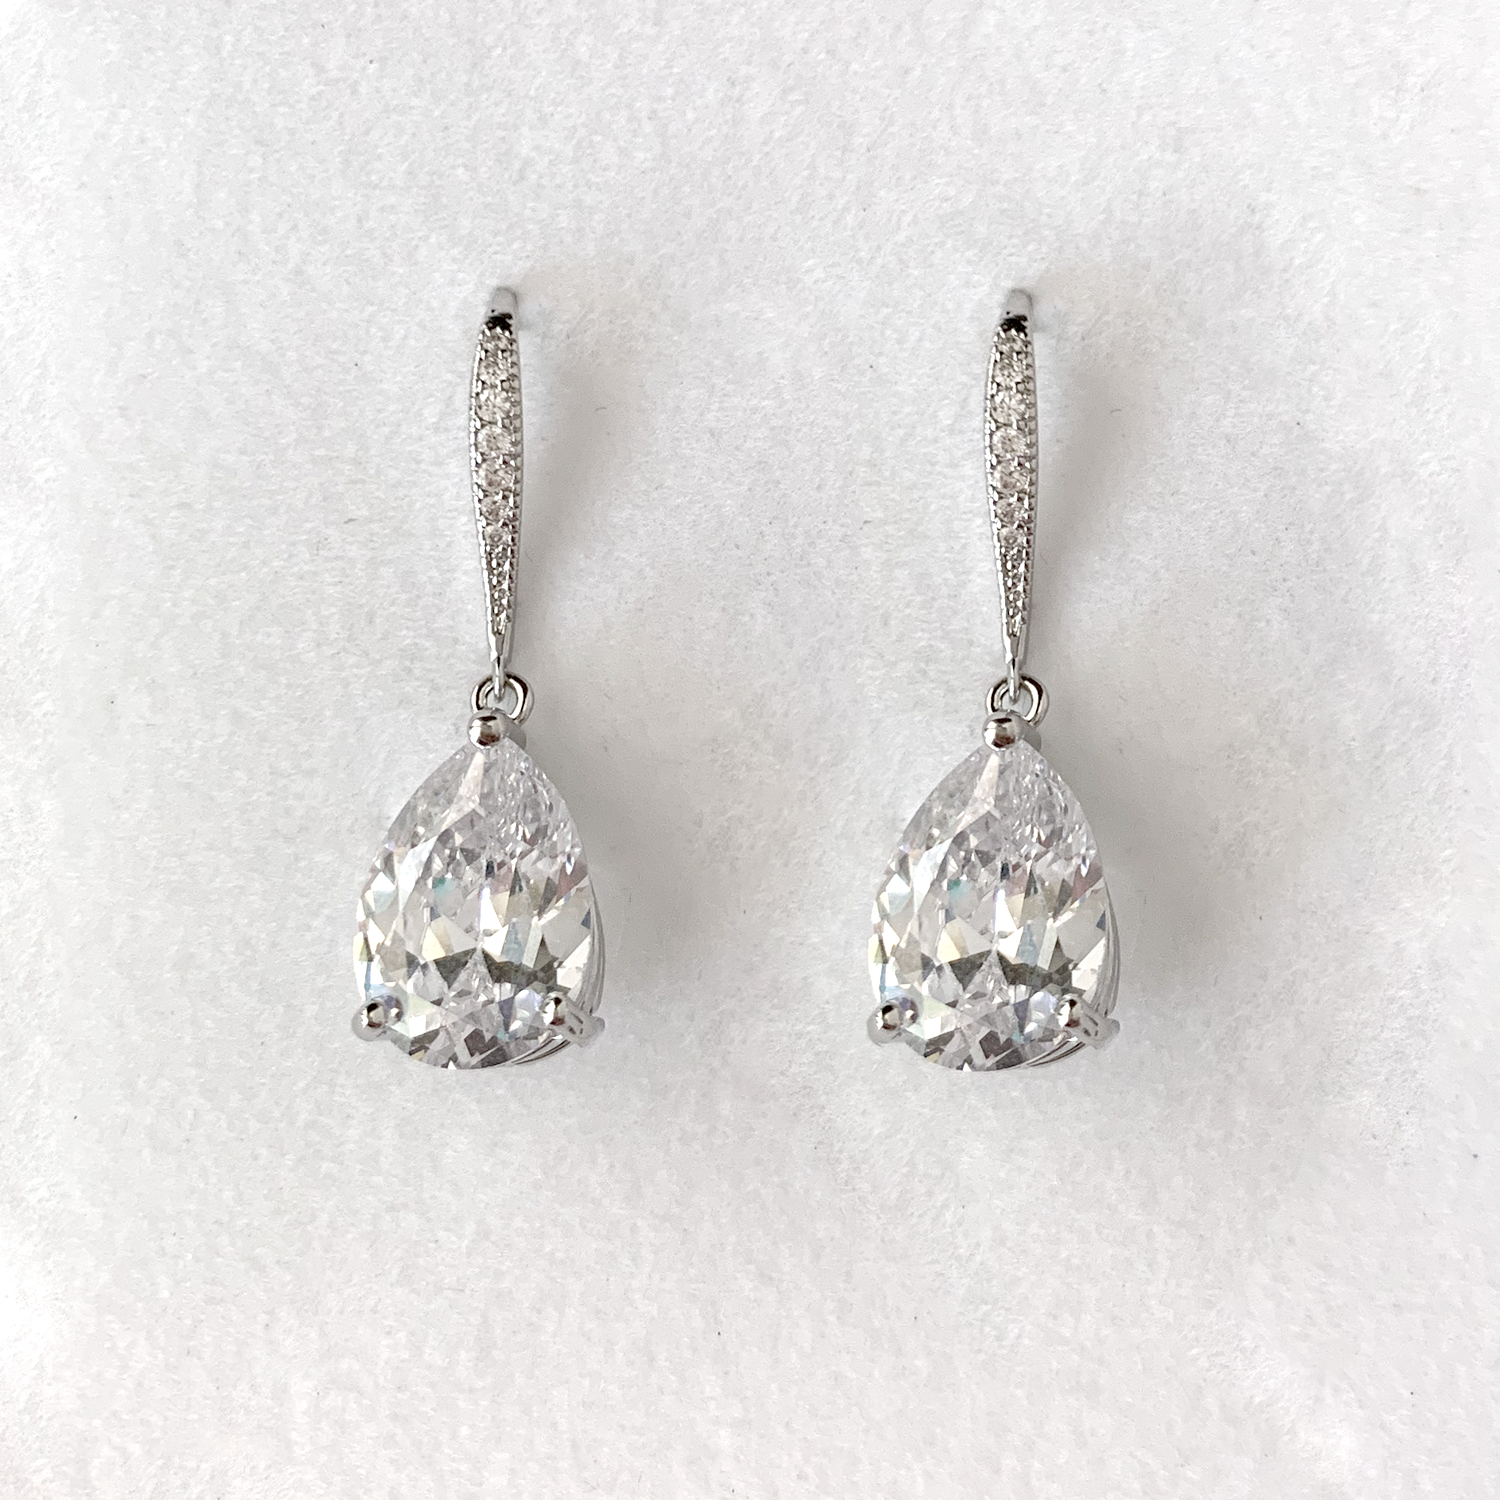 Simulated diamond teardrop bridal earrings in silver